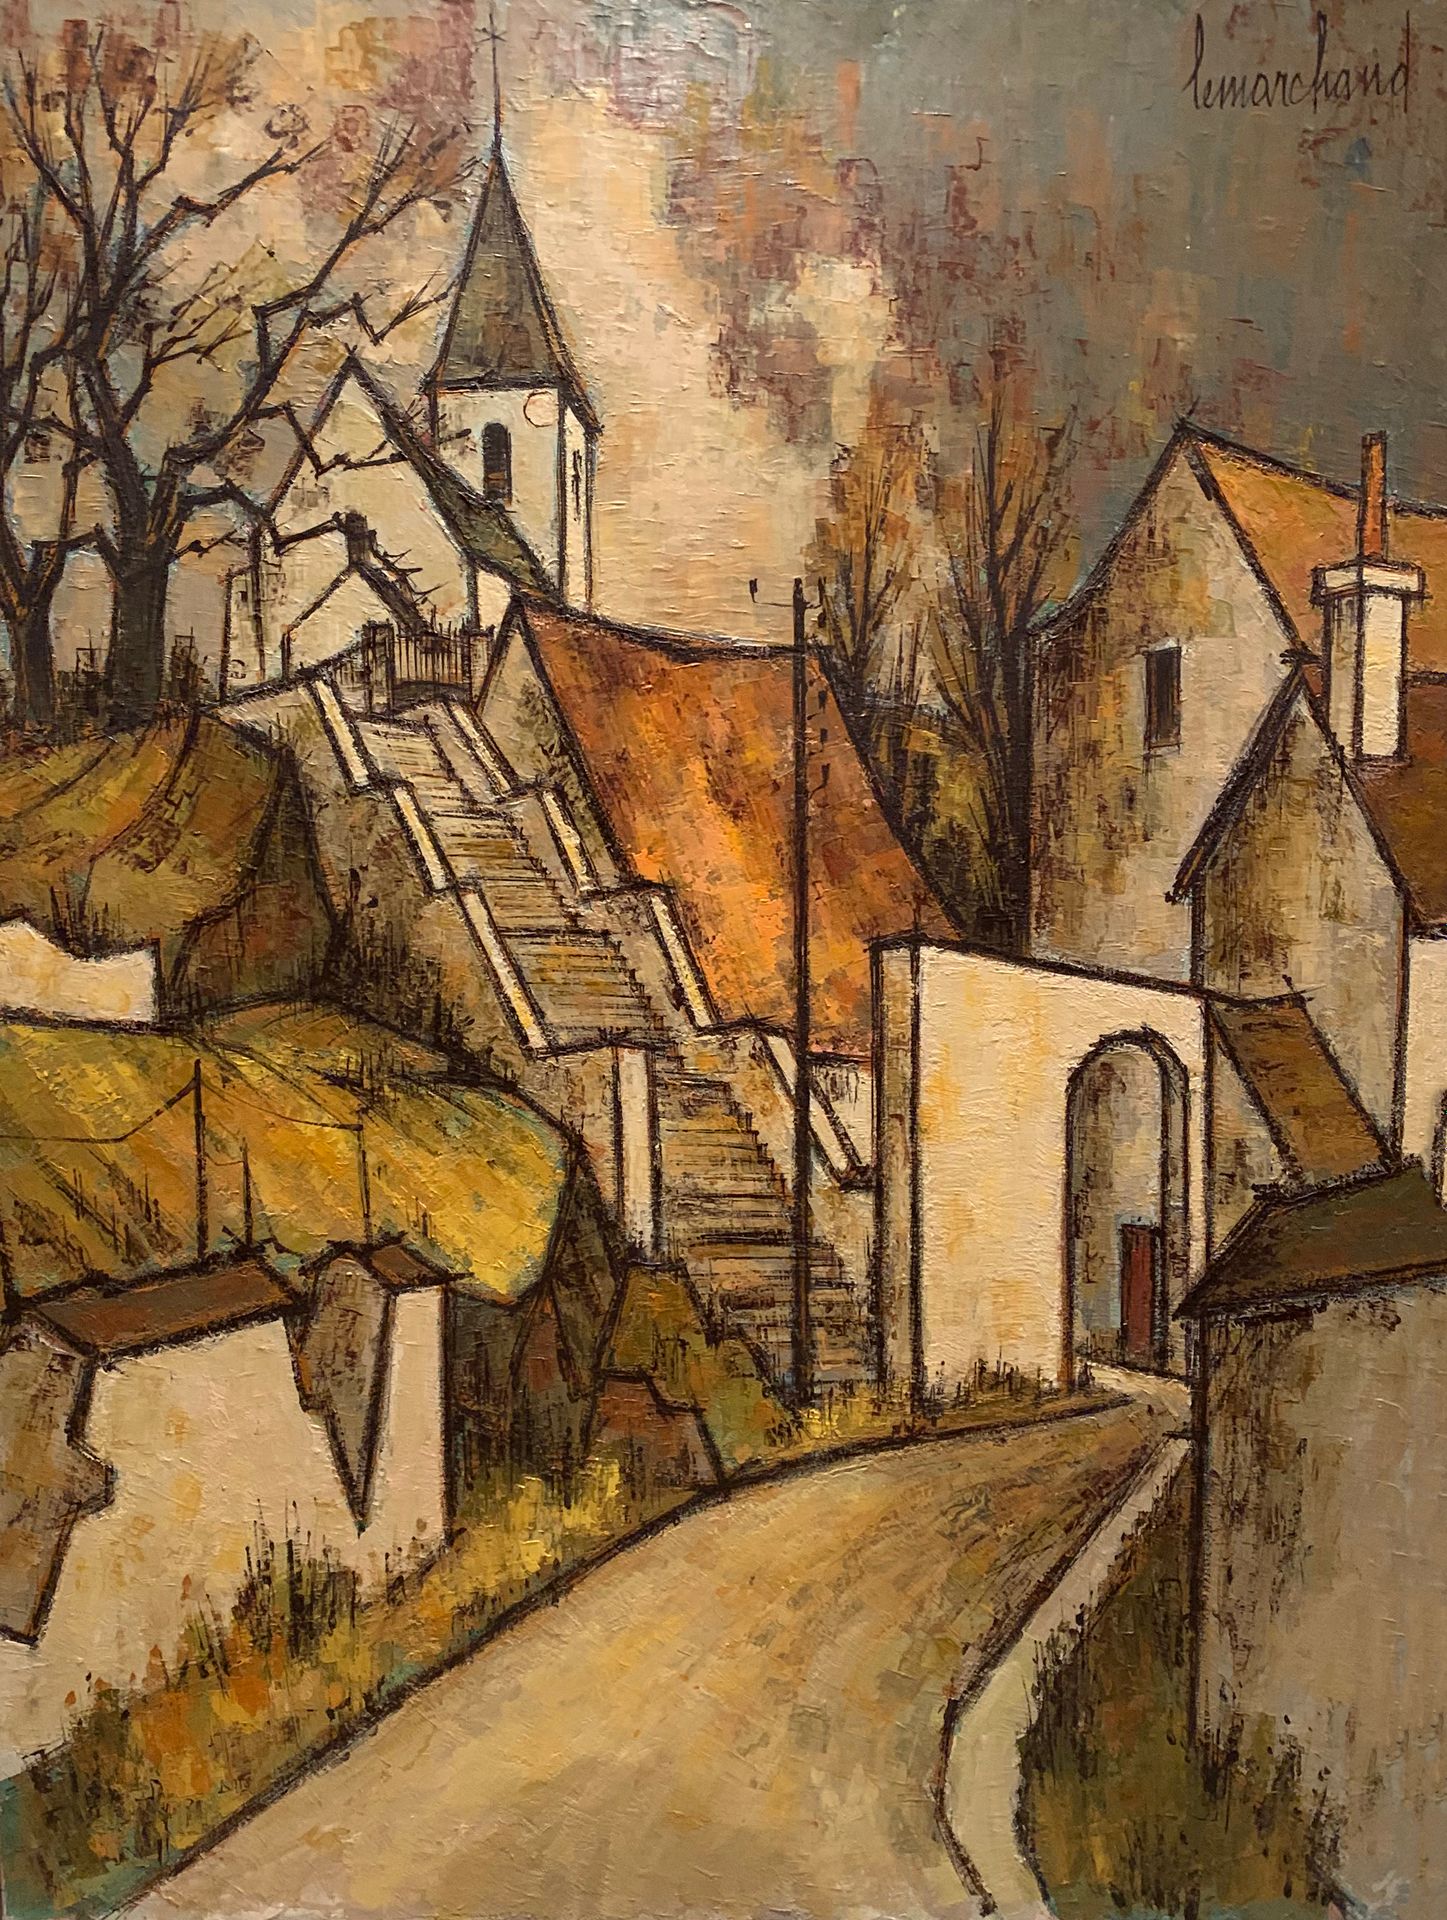 Null 皮埃尔-莱马赫德 (1906-1970)

通往教堂的楼梯

布面油画，右上角有签名

116 x 89 cm。